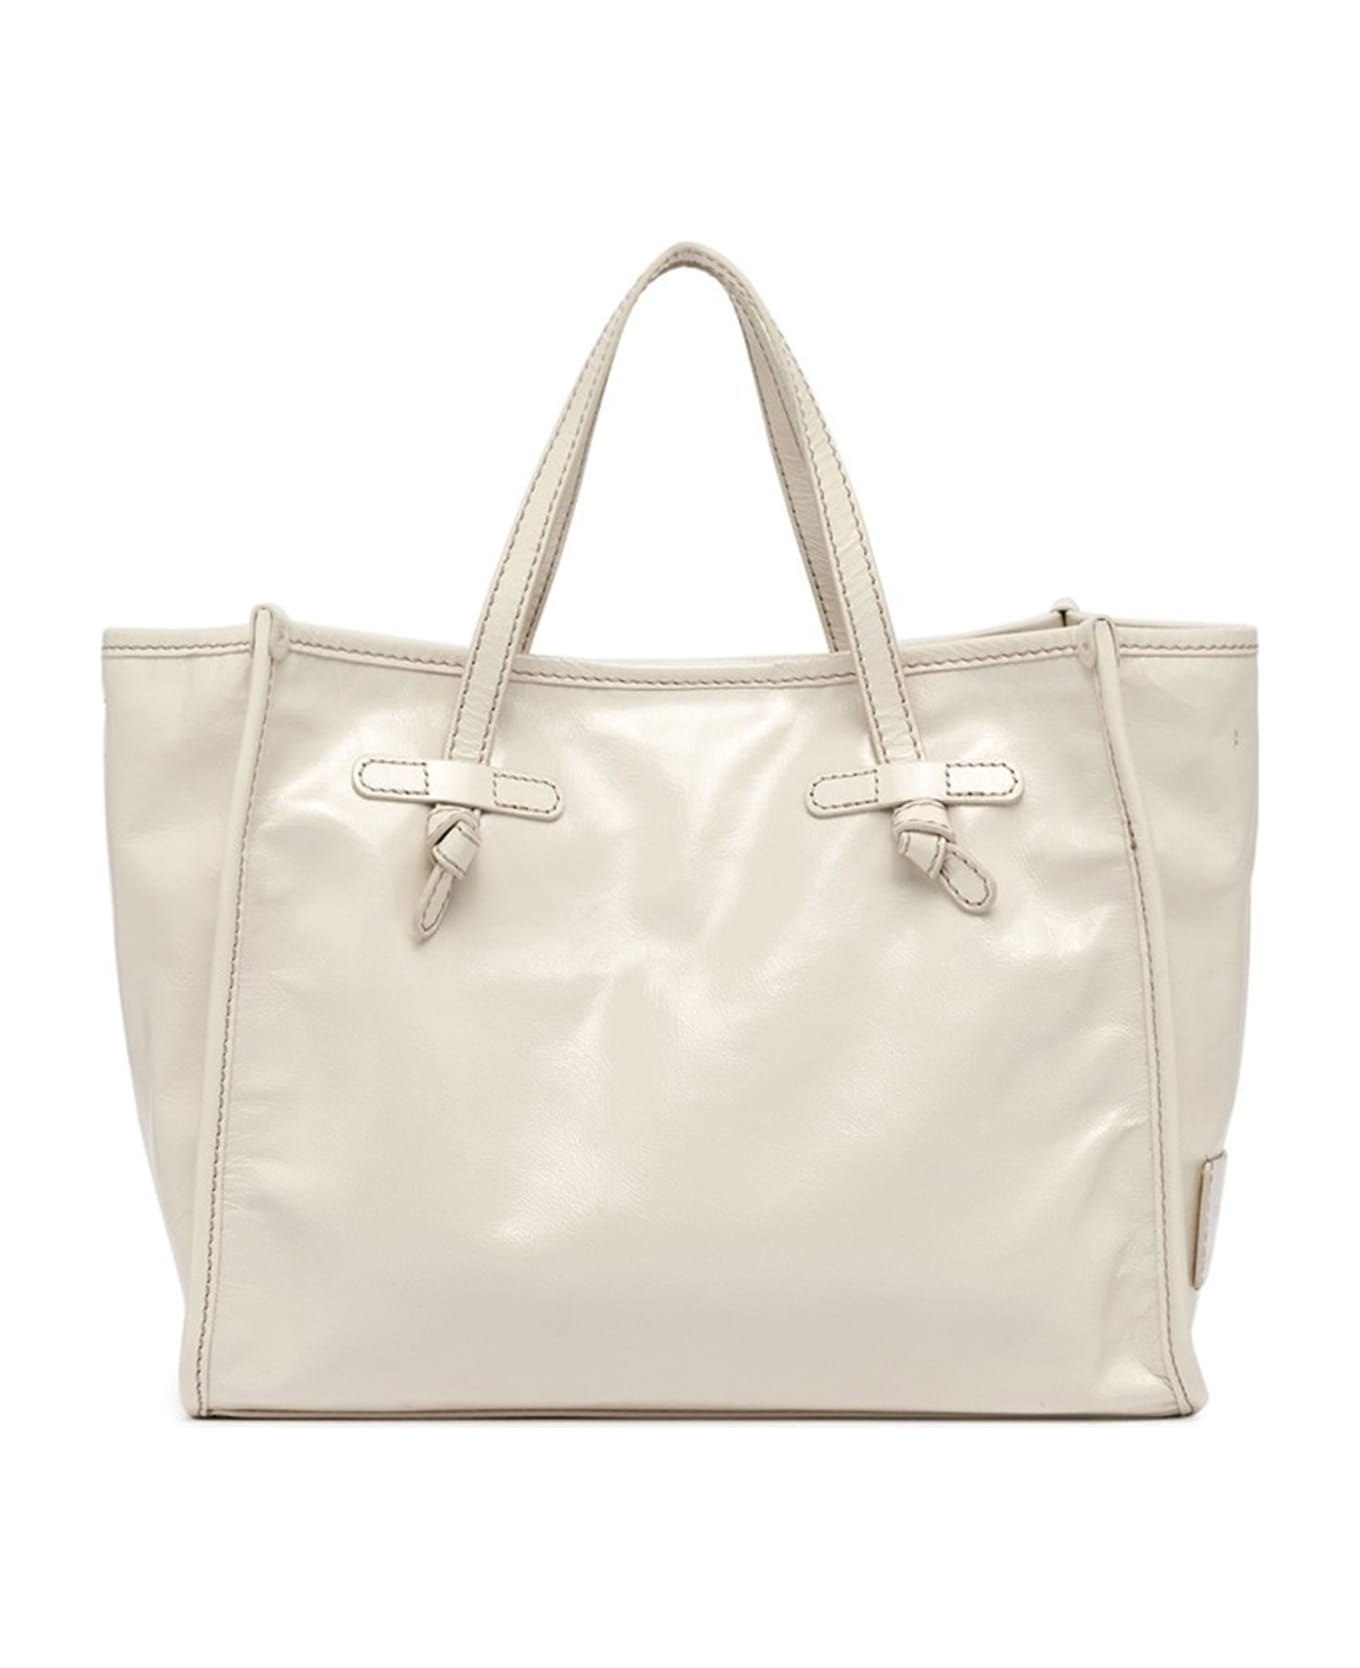 Gianni Chiarini Marcella Shopping Bag In Translucent Leather - TALCO トートバッグ